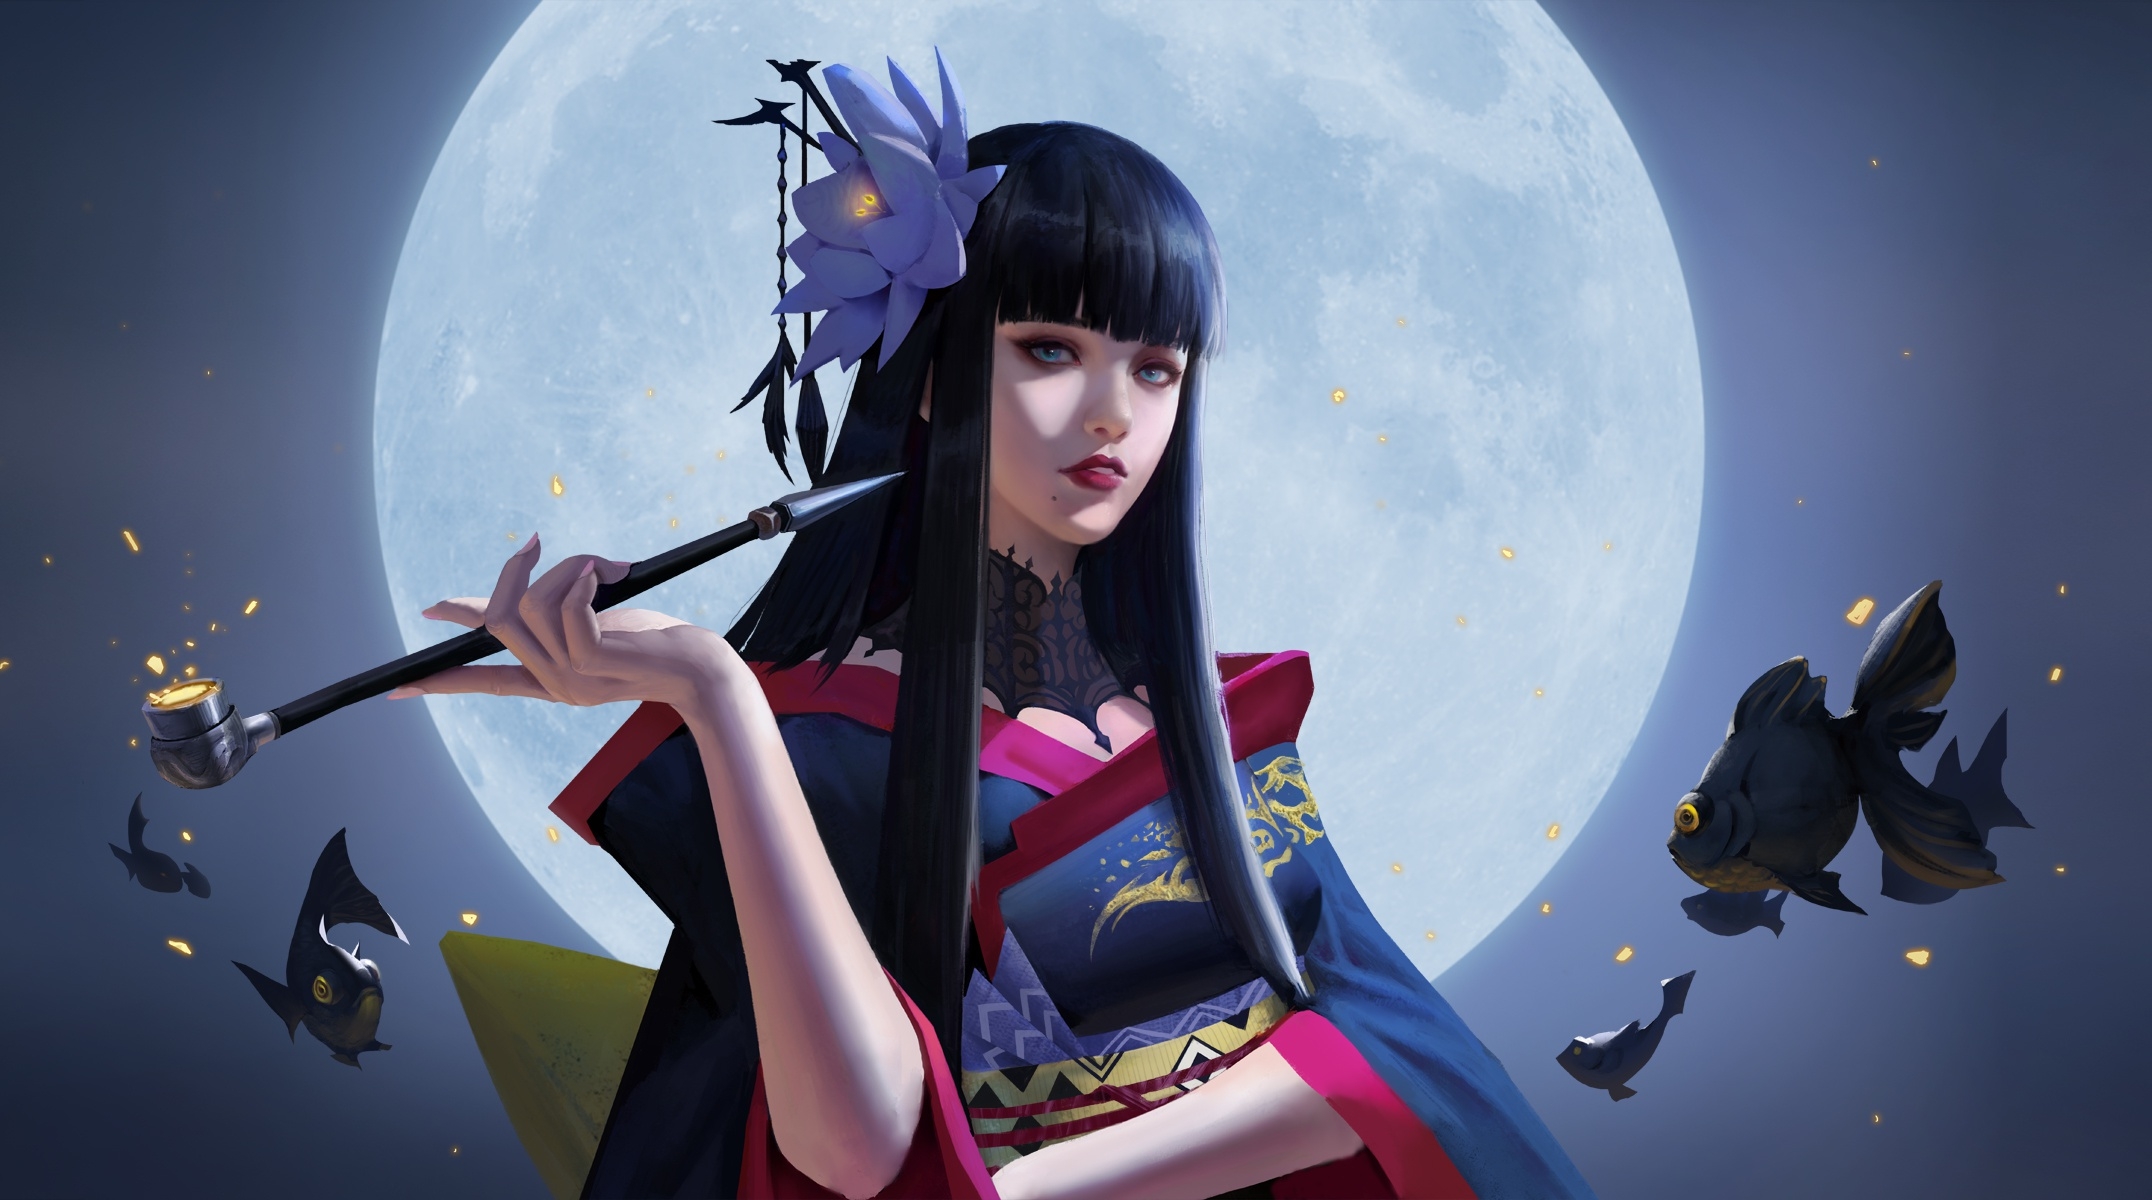 Asian Woman on Full Moon Night by anima-08